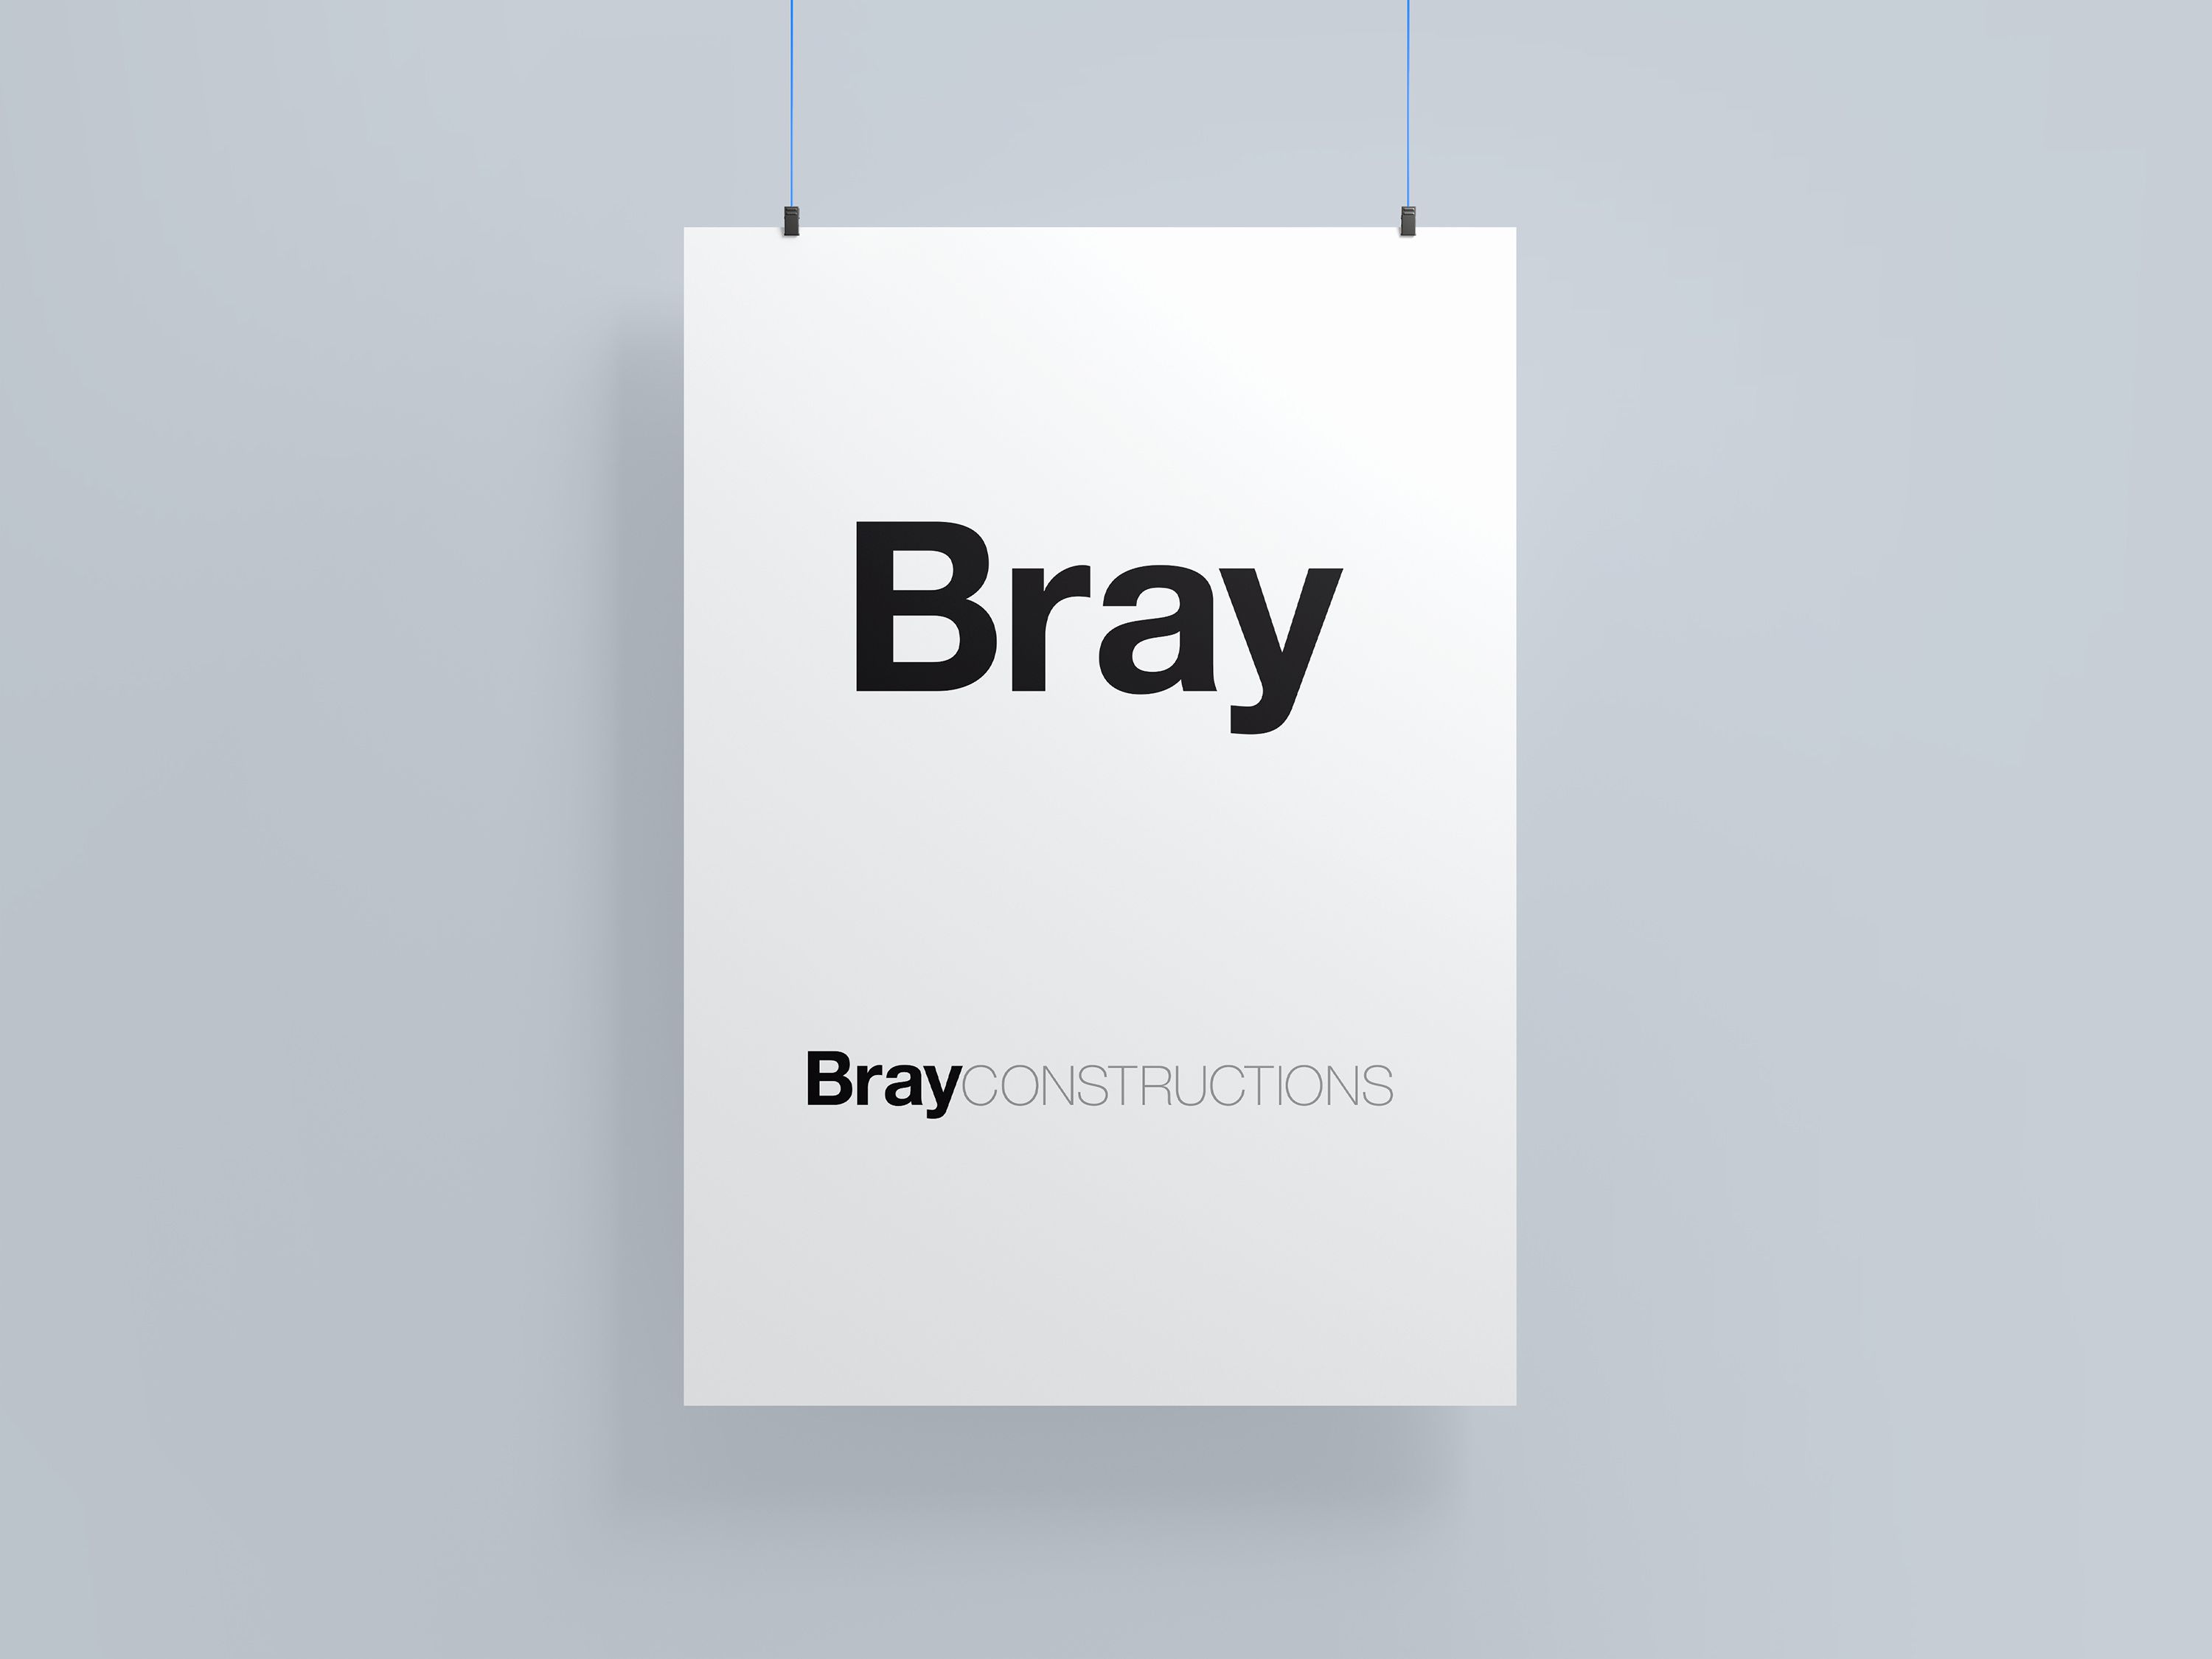 Bray-Constructions Black logo version